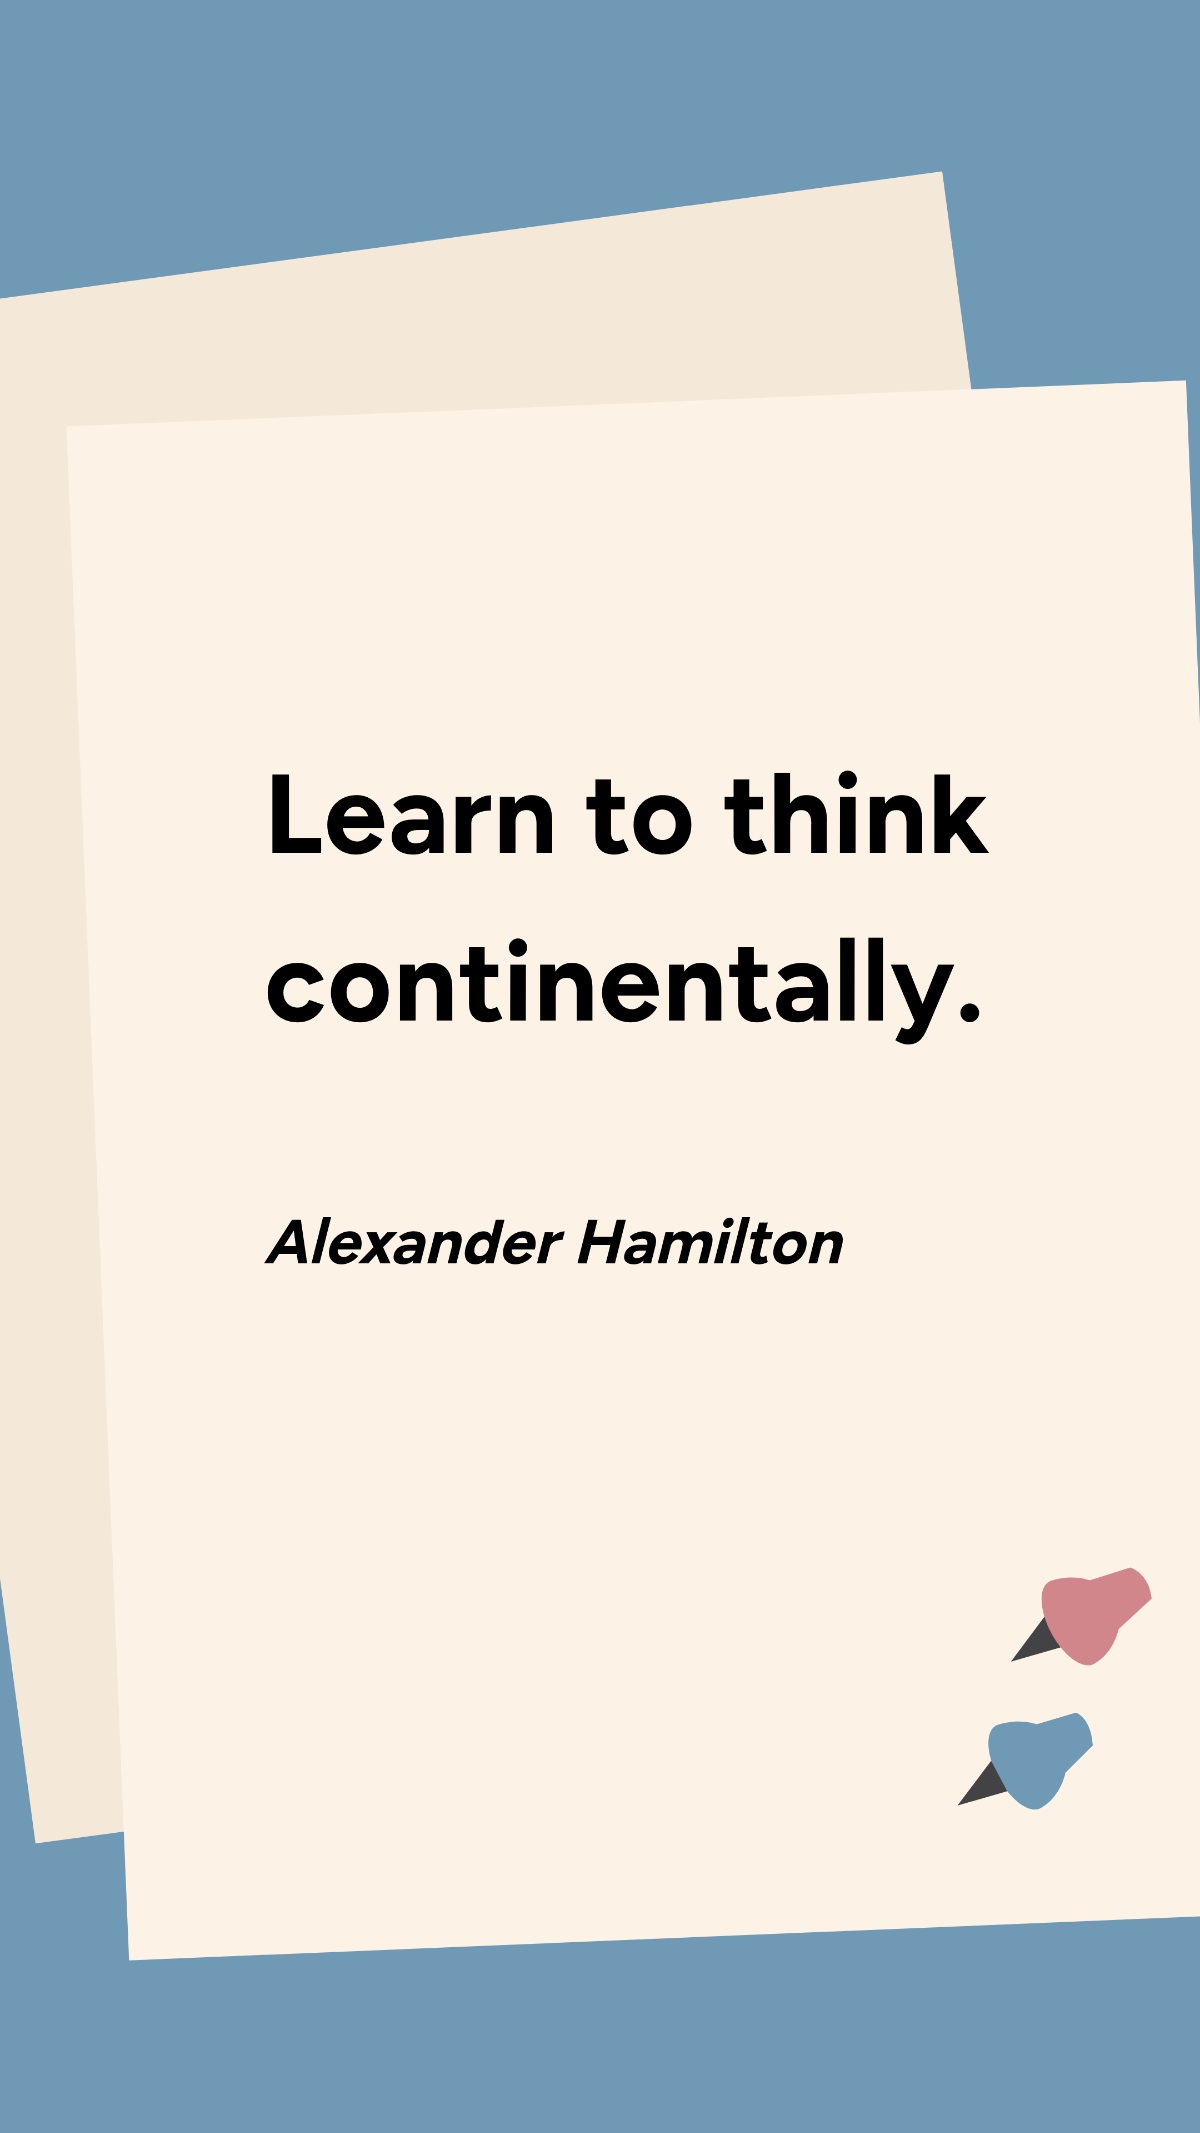 Alexander Hamilton - Learn to think continentally.